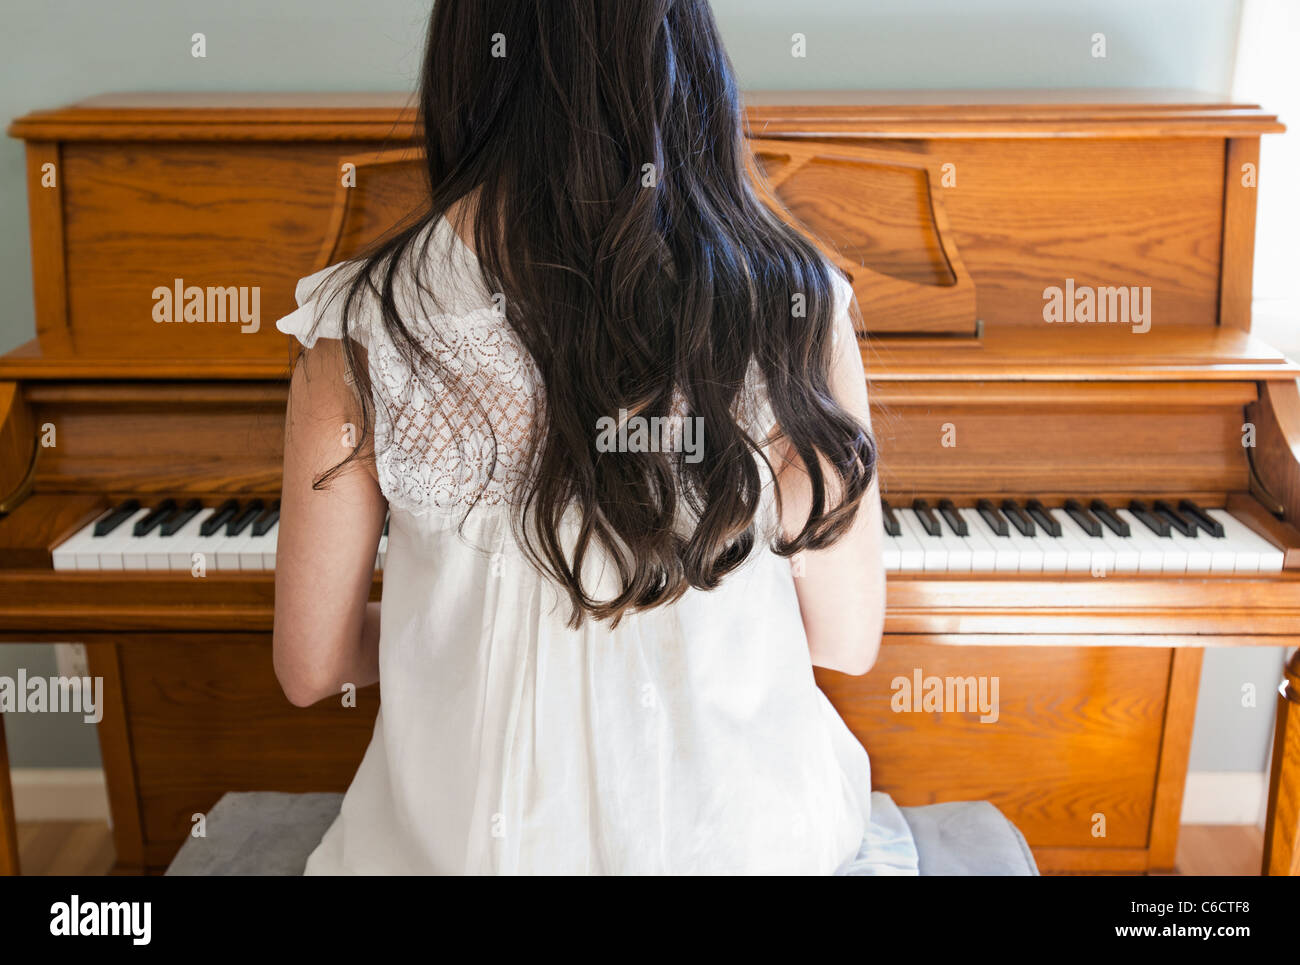 Mixed race woman playing piano Stock Photo